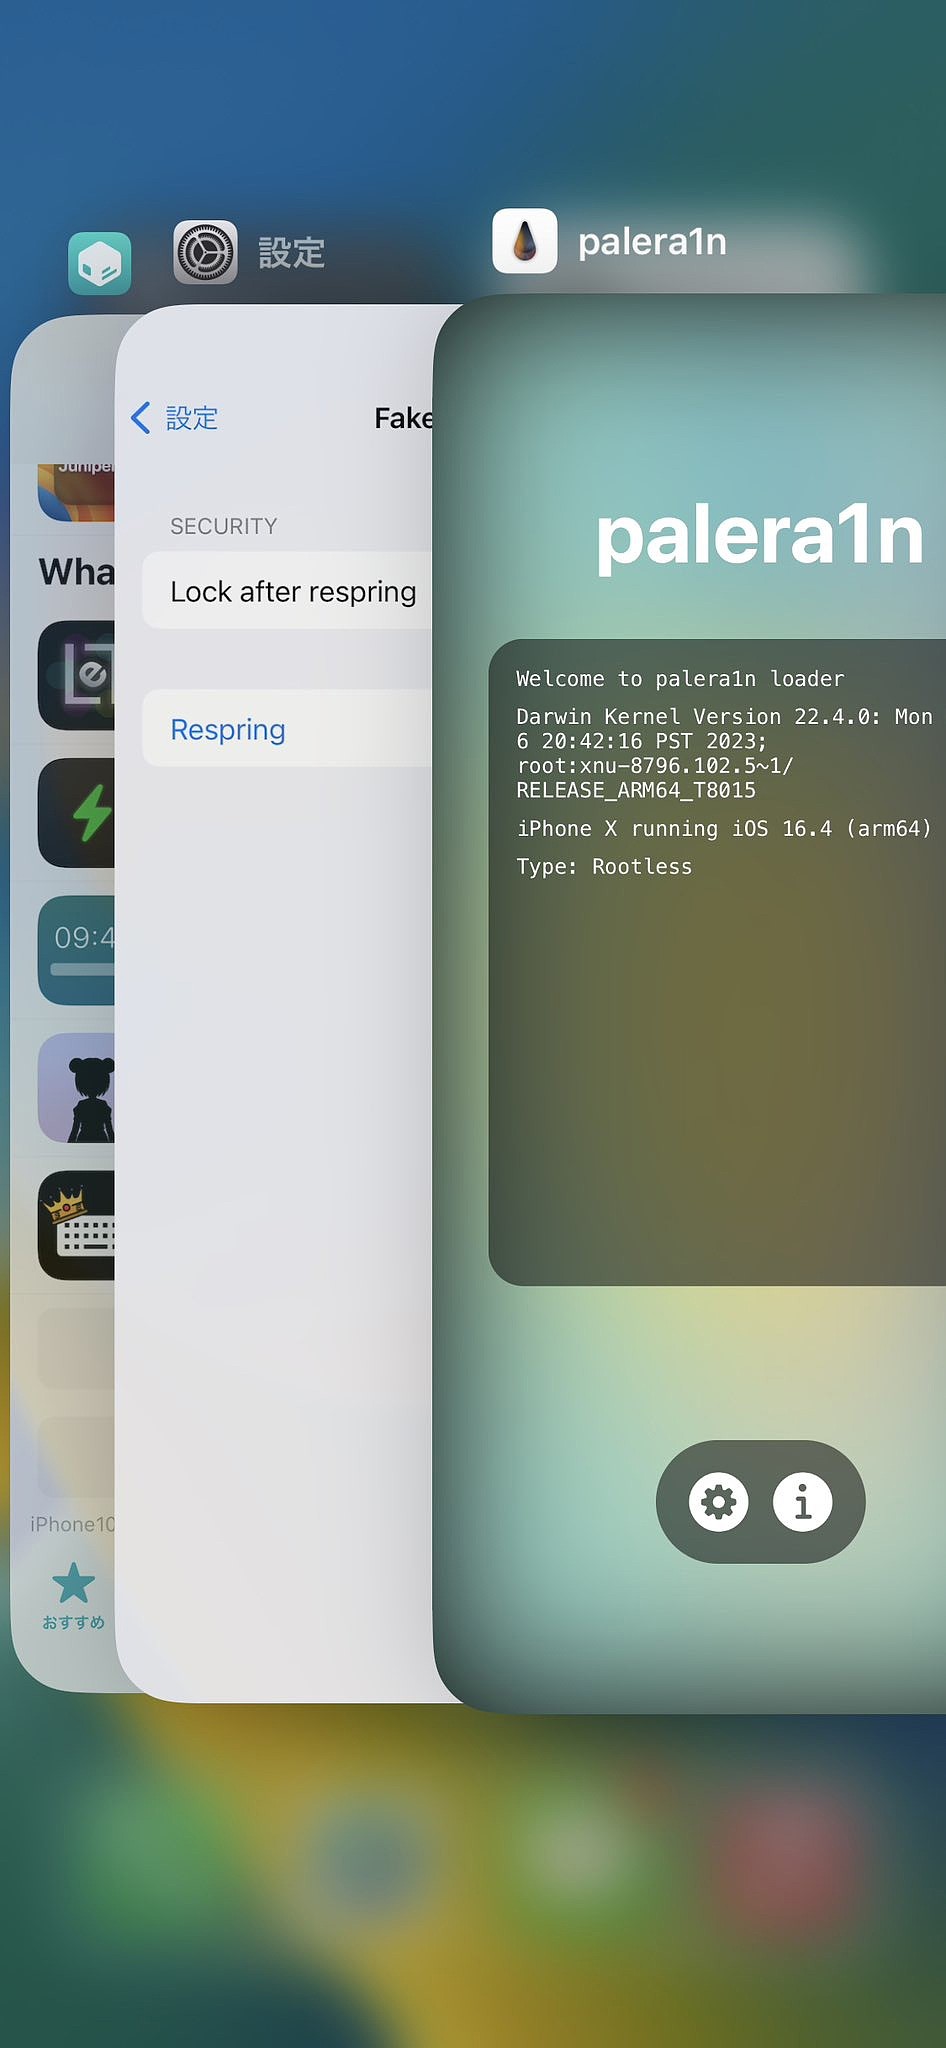 Palera1n 团队预告：搭载 A9-A11 芯片的旧 iPhone 即将支持 iOS 16.4 越狱 - 1